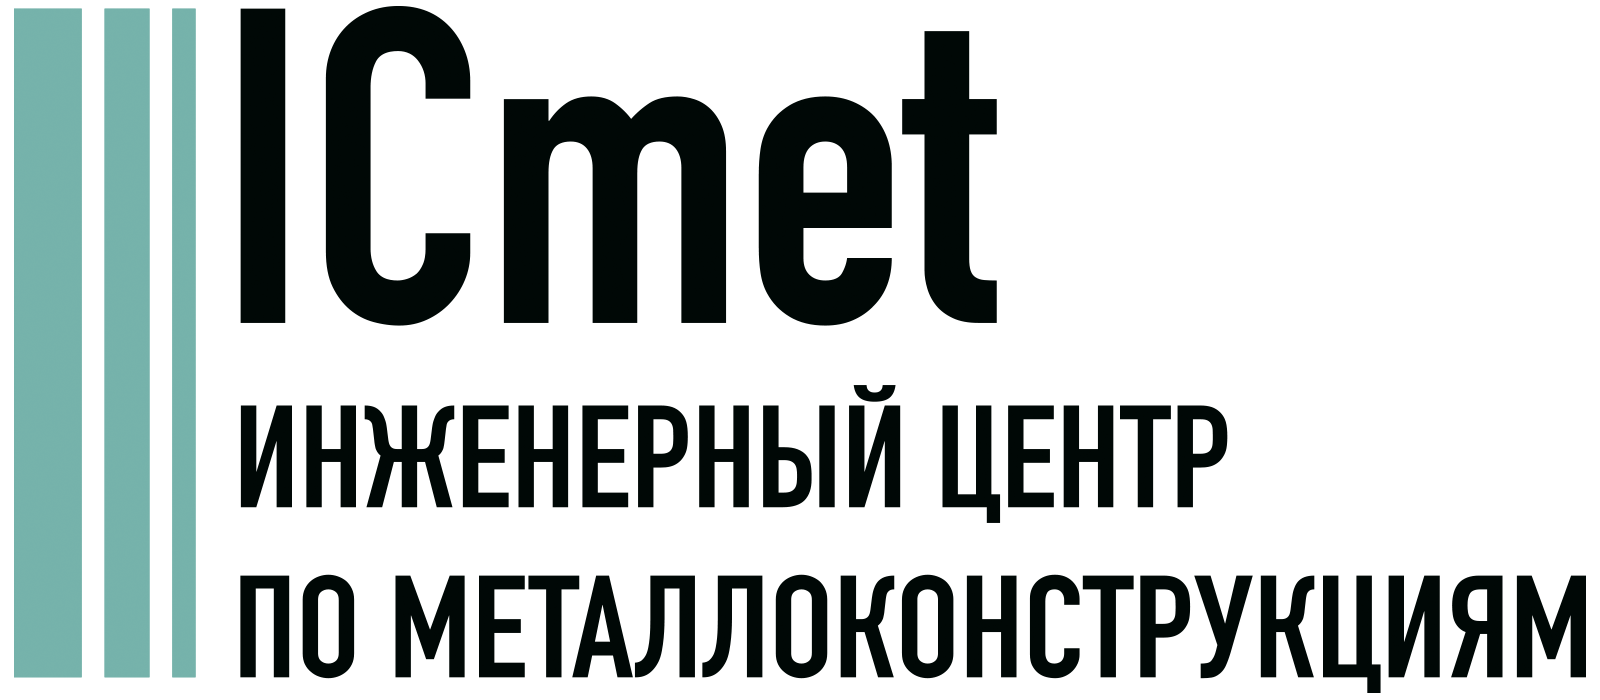 ICmet Астрахань